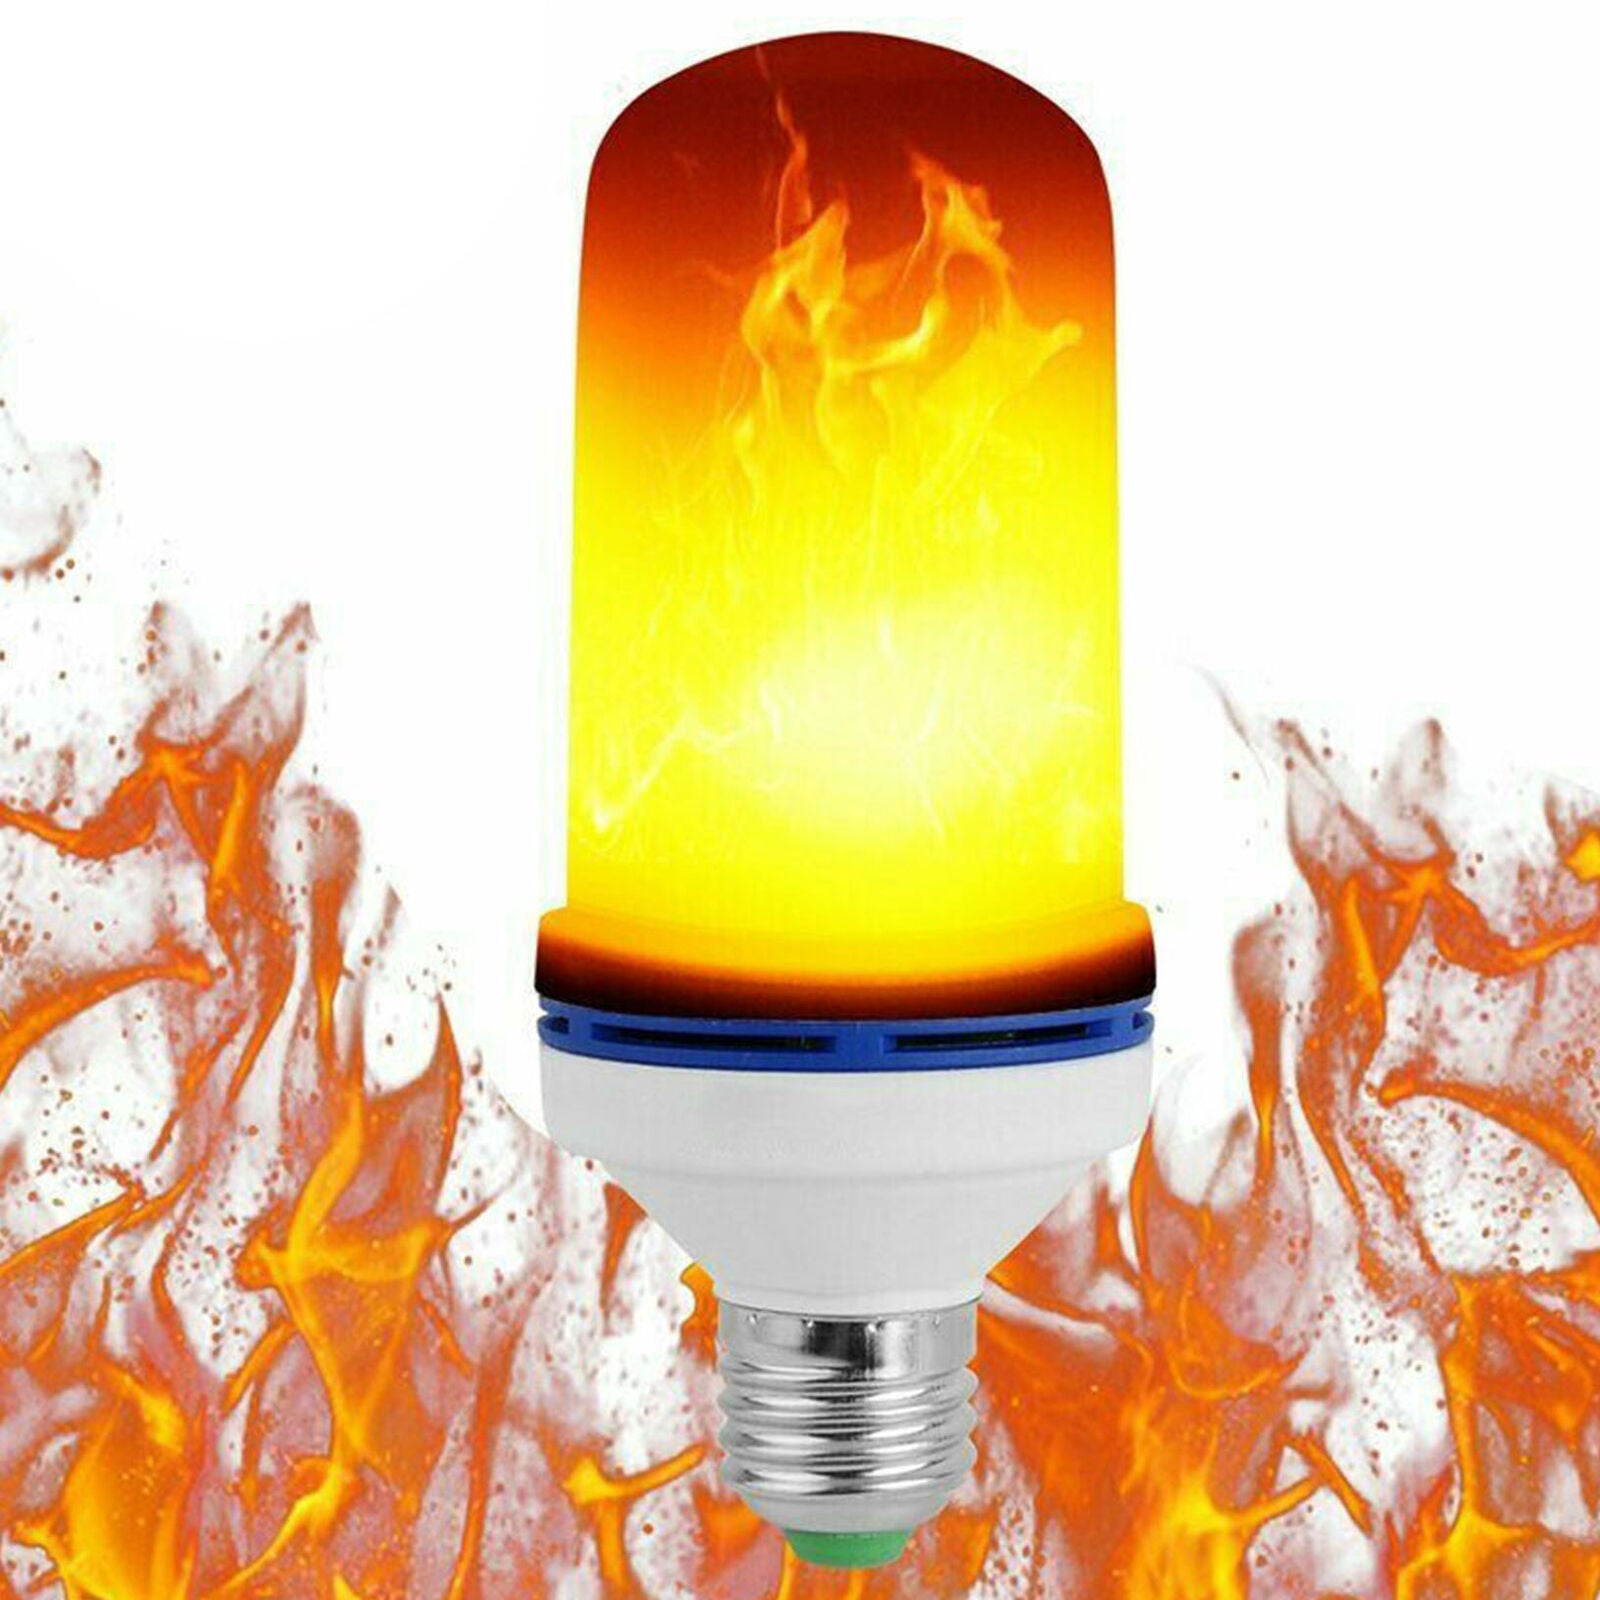 3 Modes LED Flame Effect Simulated Nature Fire Light Bulb E27 5W Decoration Lamp